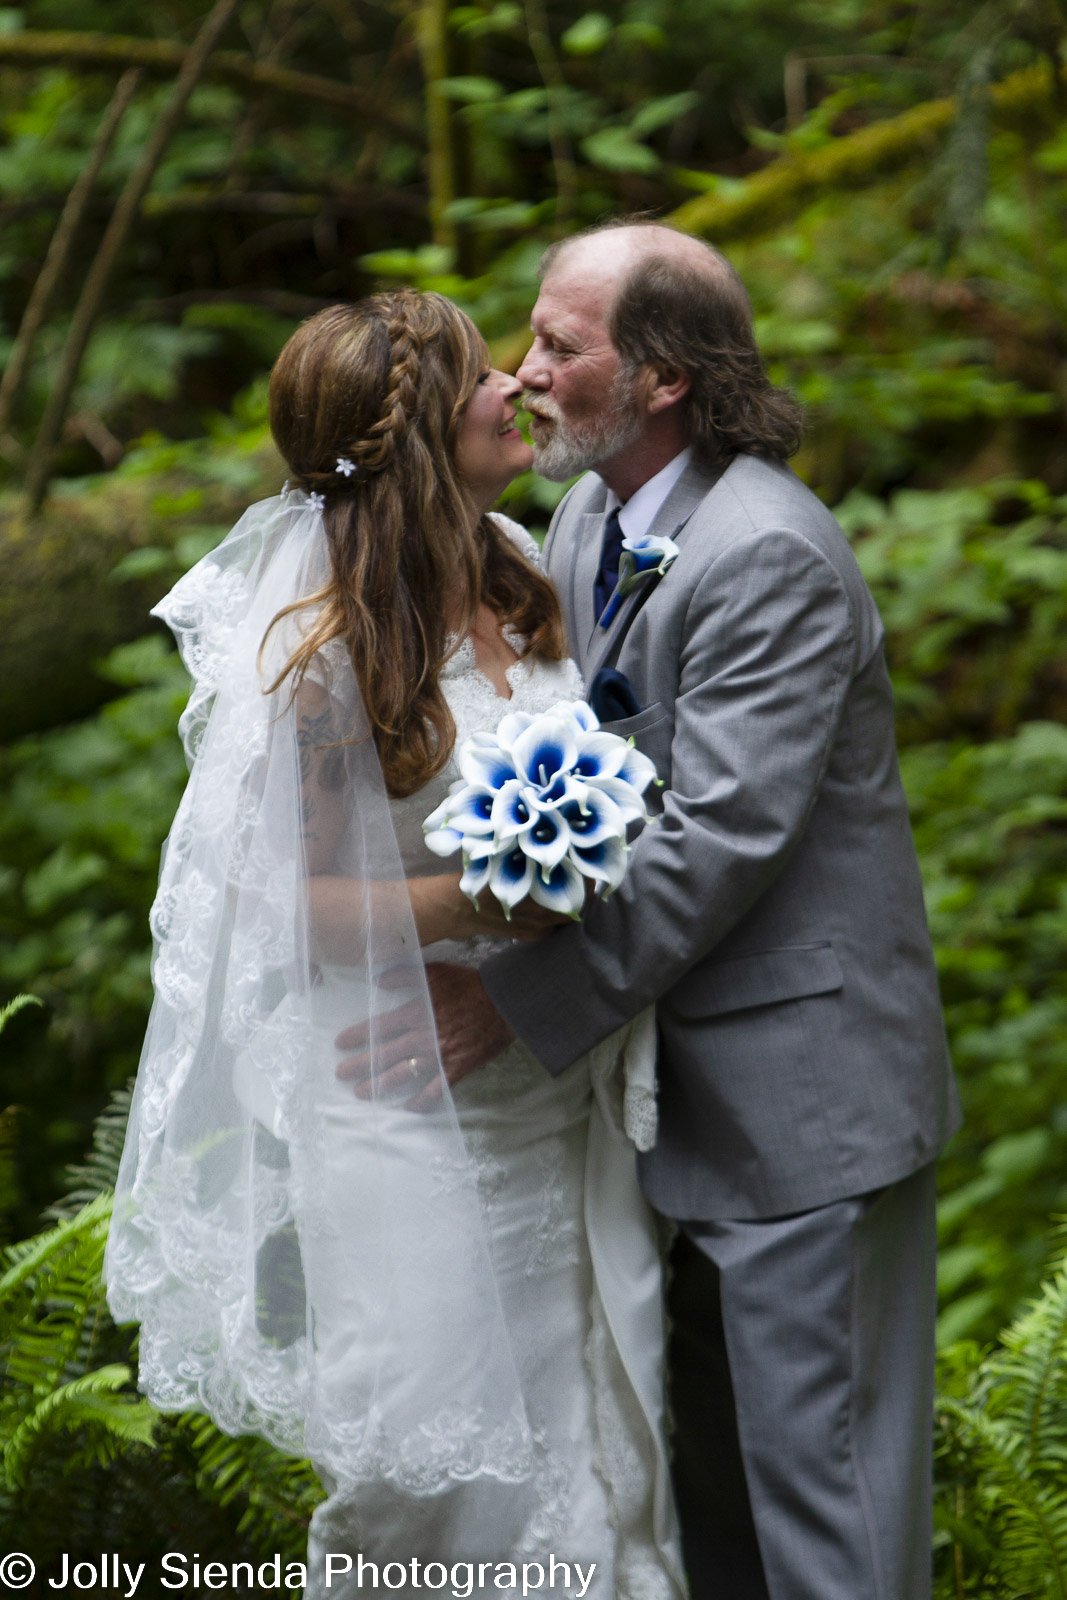 Pacific Northwest weddings by Jolly Sienda Photography